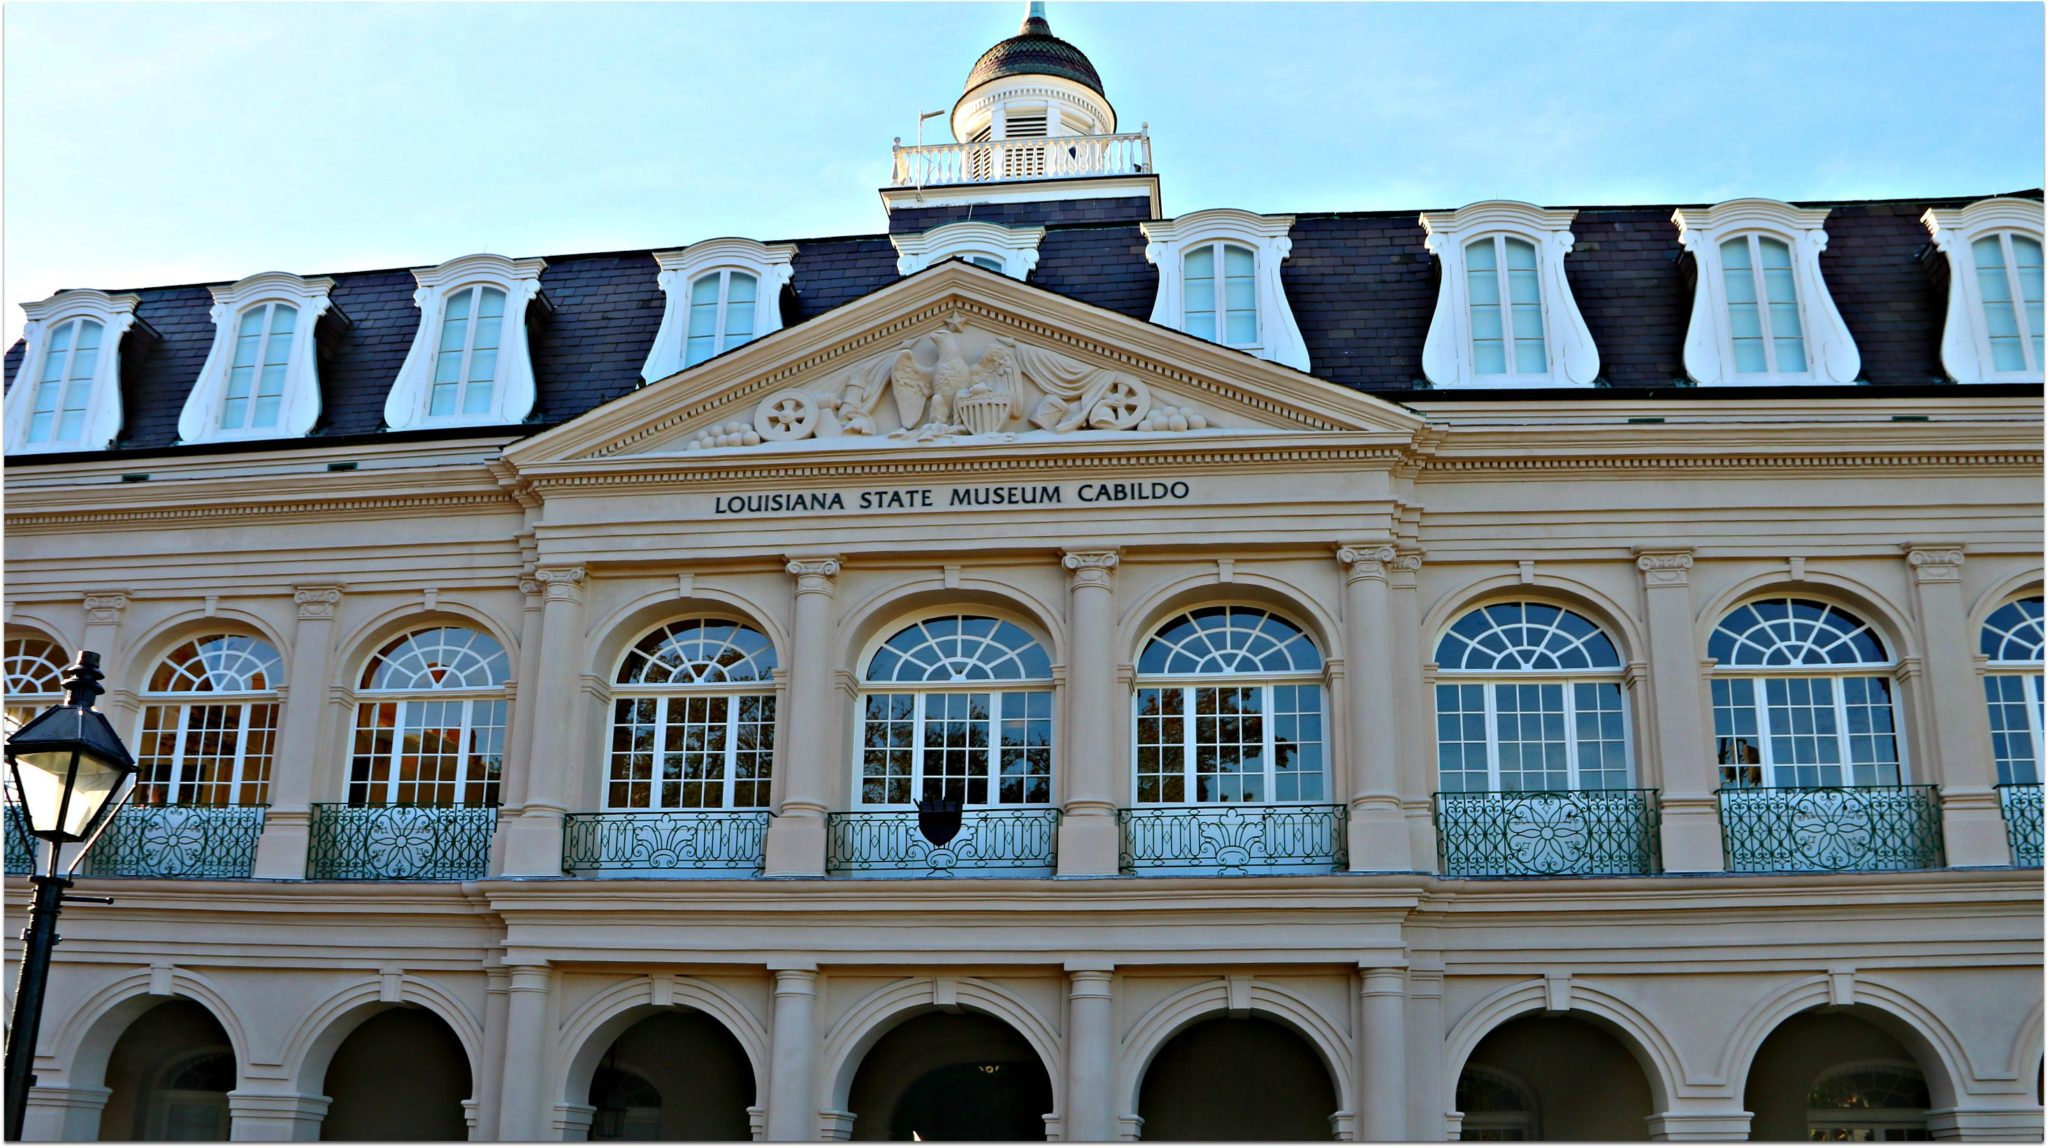 French Quarter Historic Buildings, The Cabildo